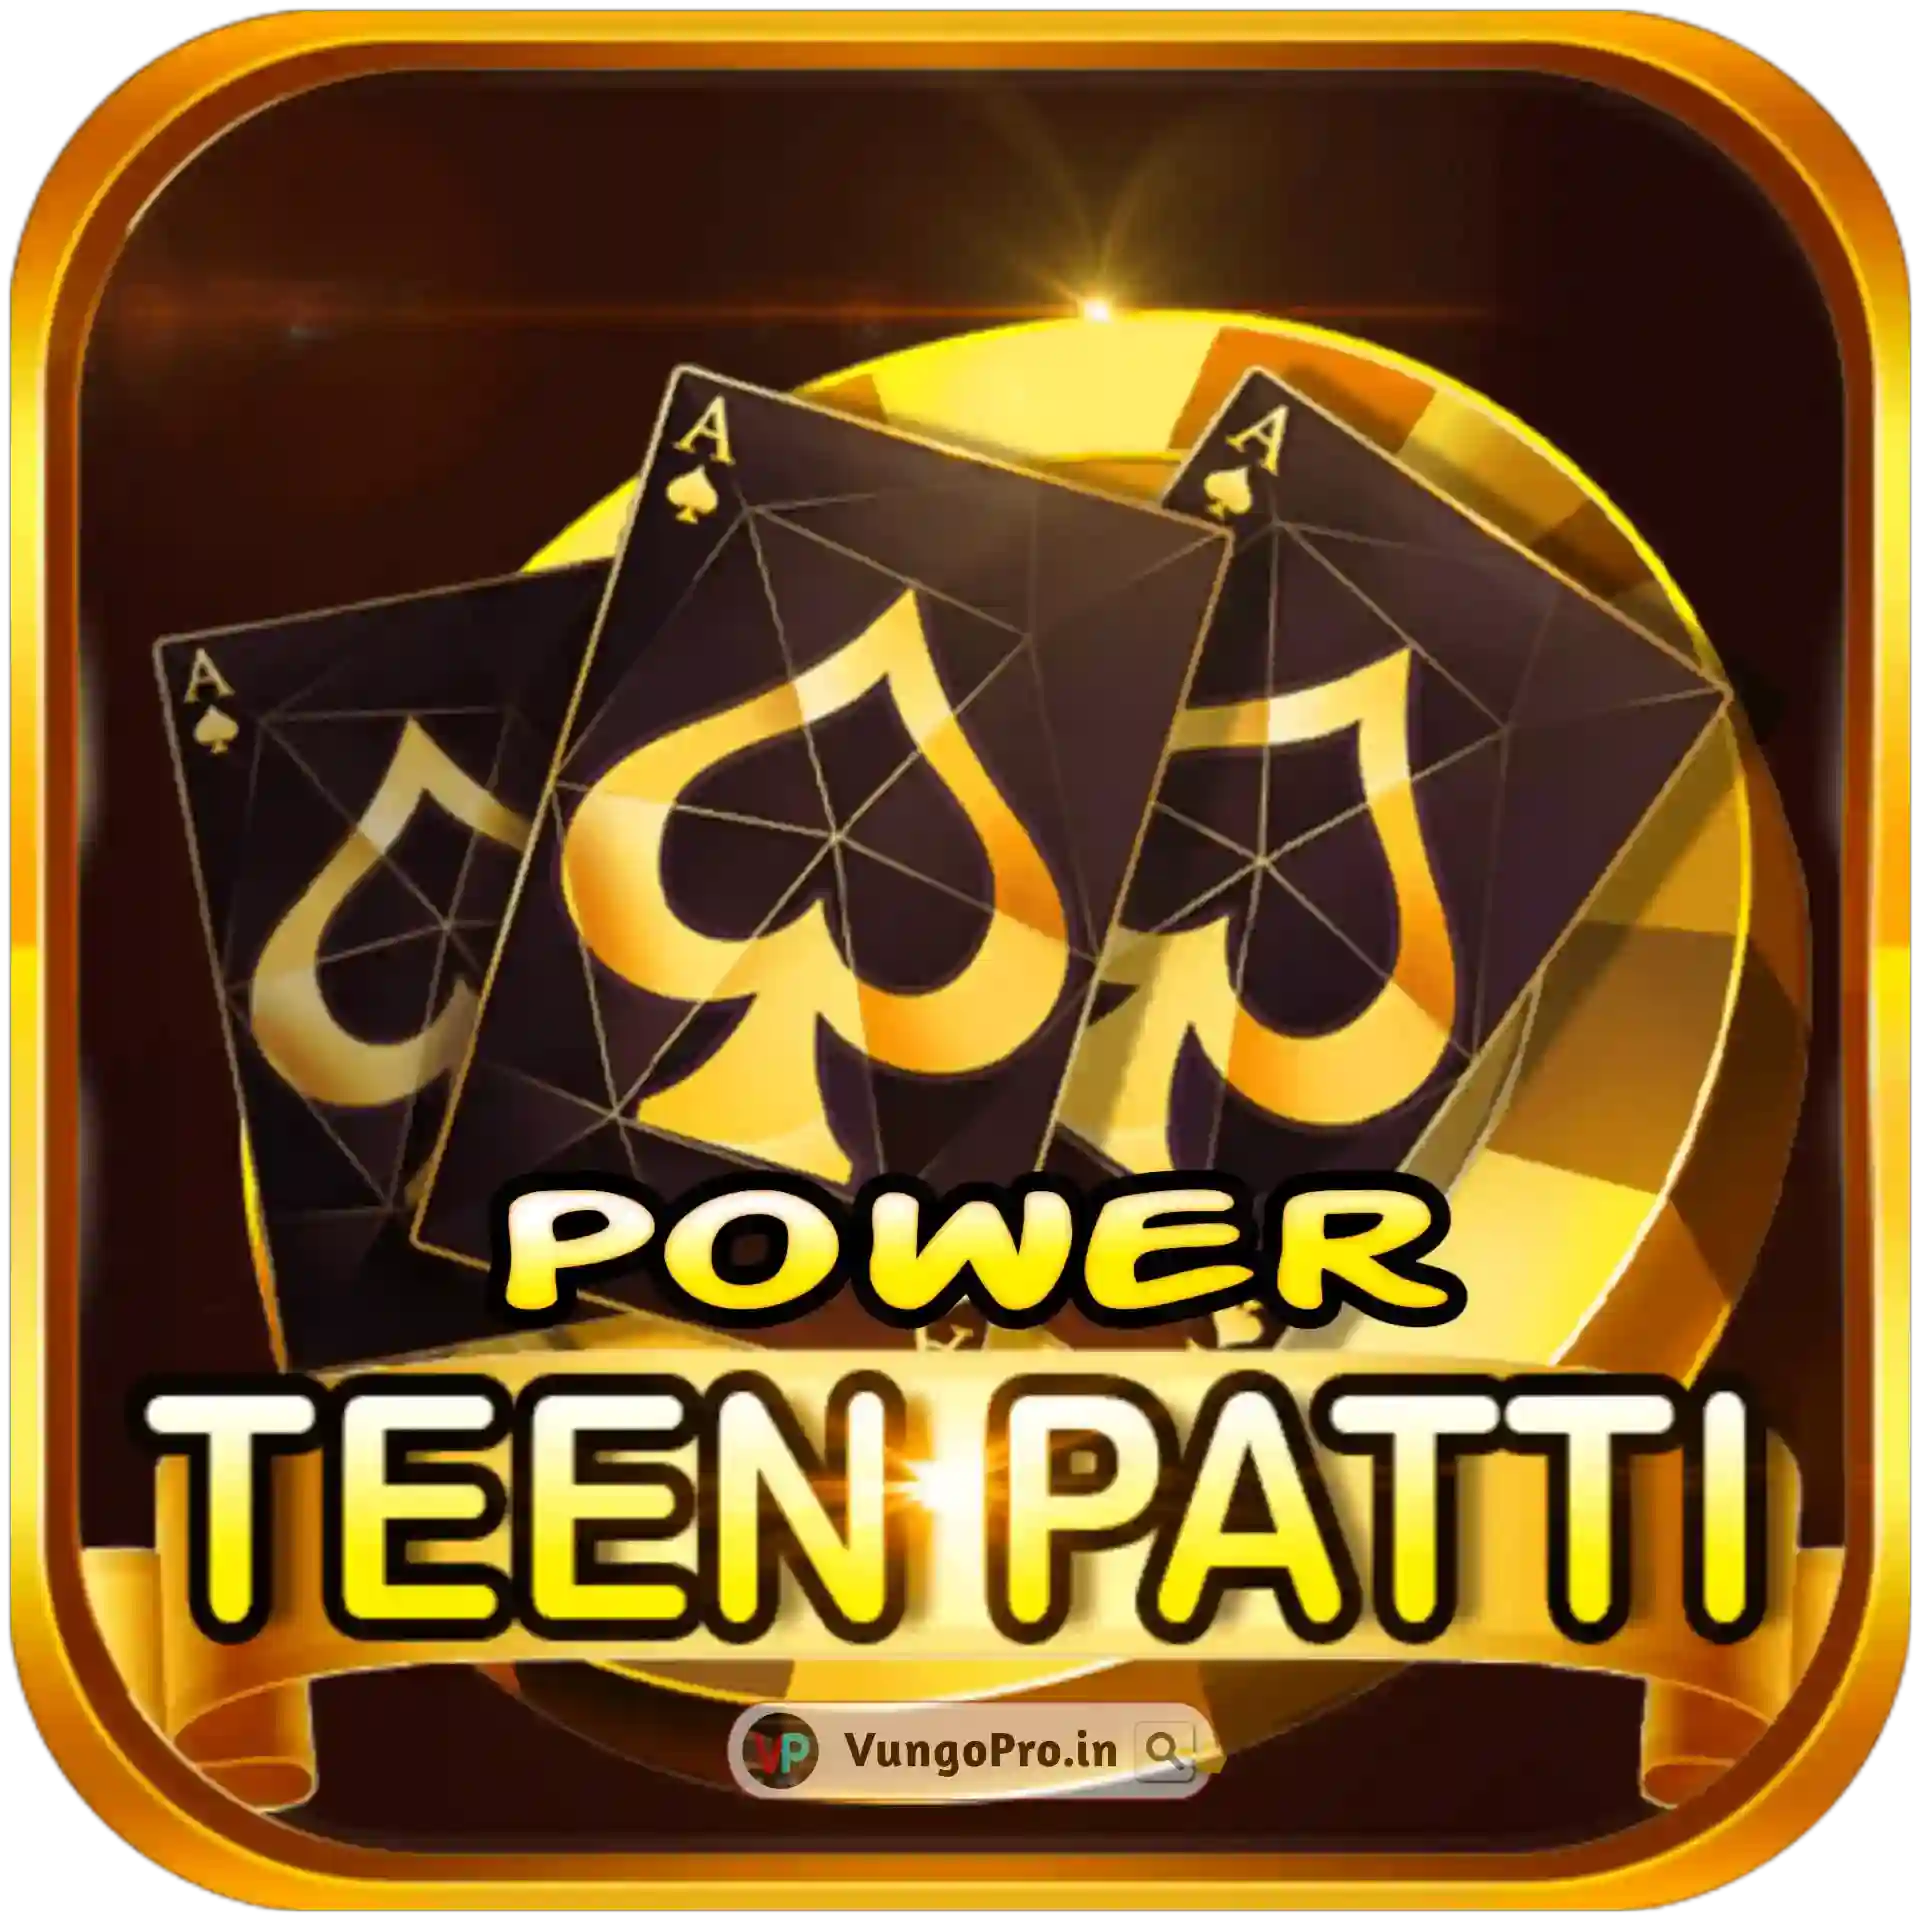 Teen Patti Power Logo - India Game Download